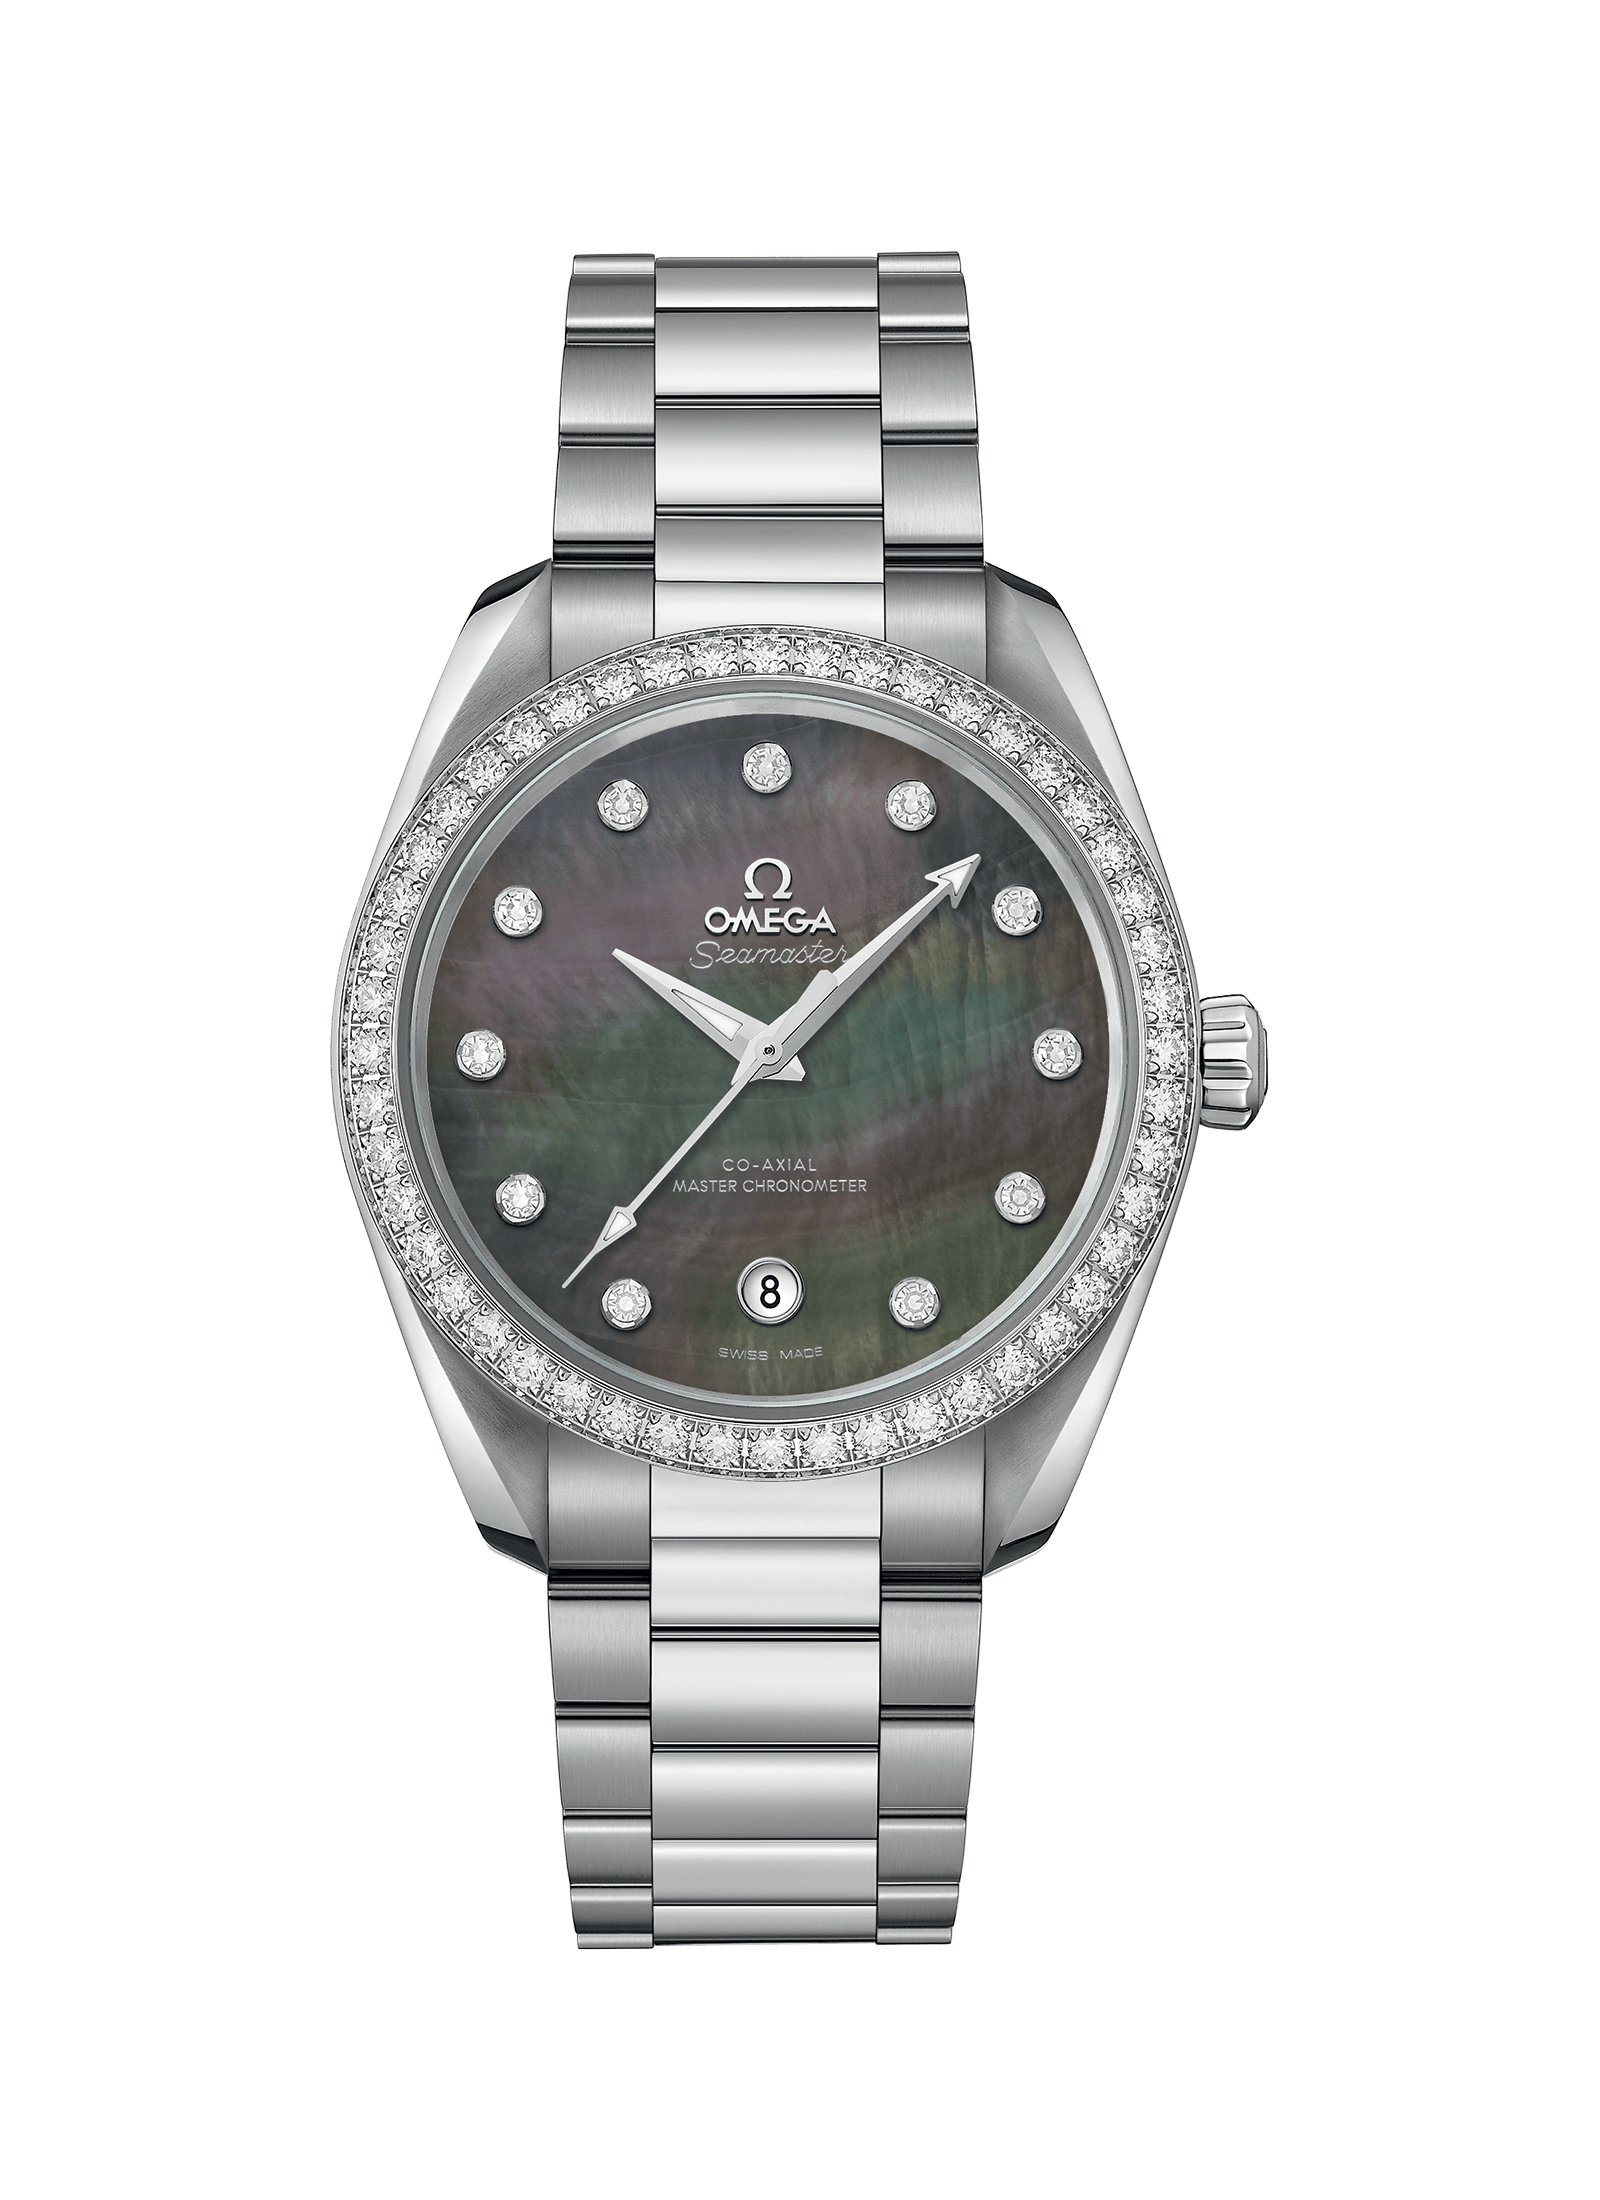 Aqua Terra 150M Co‑Axial Master Chronometer pour femme 38 mm